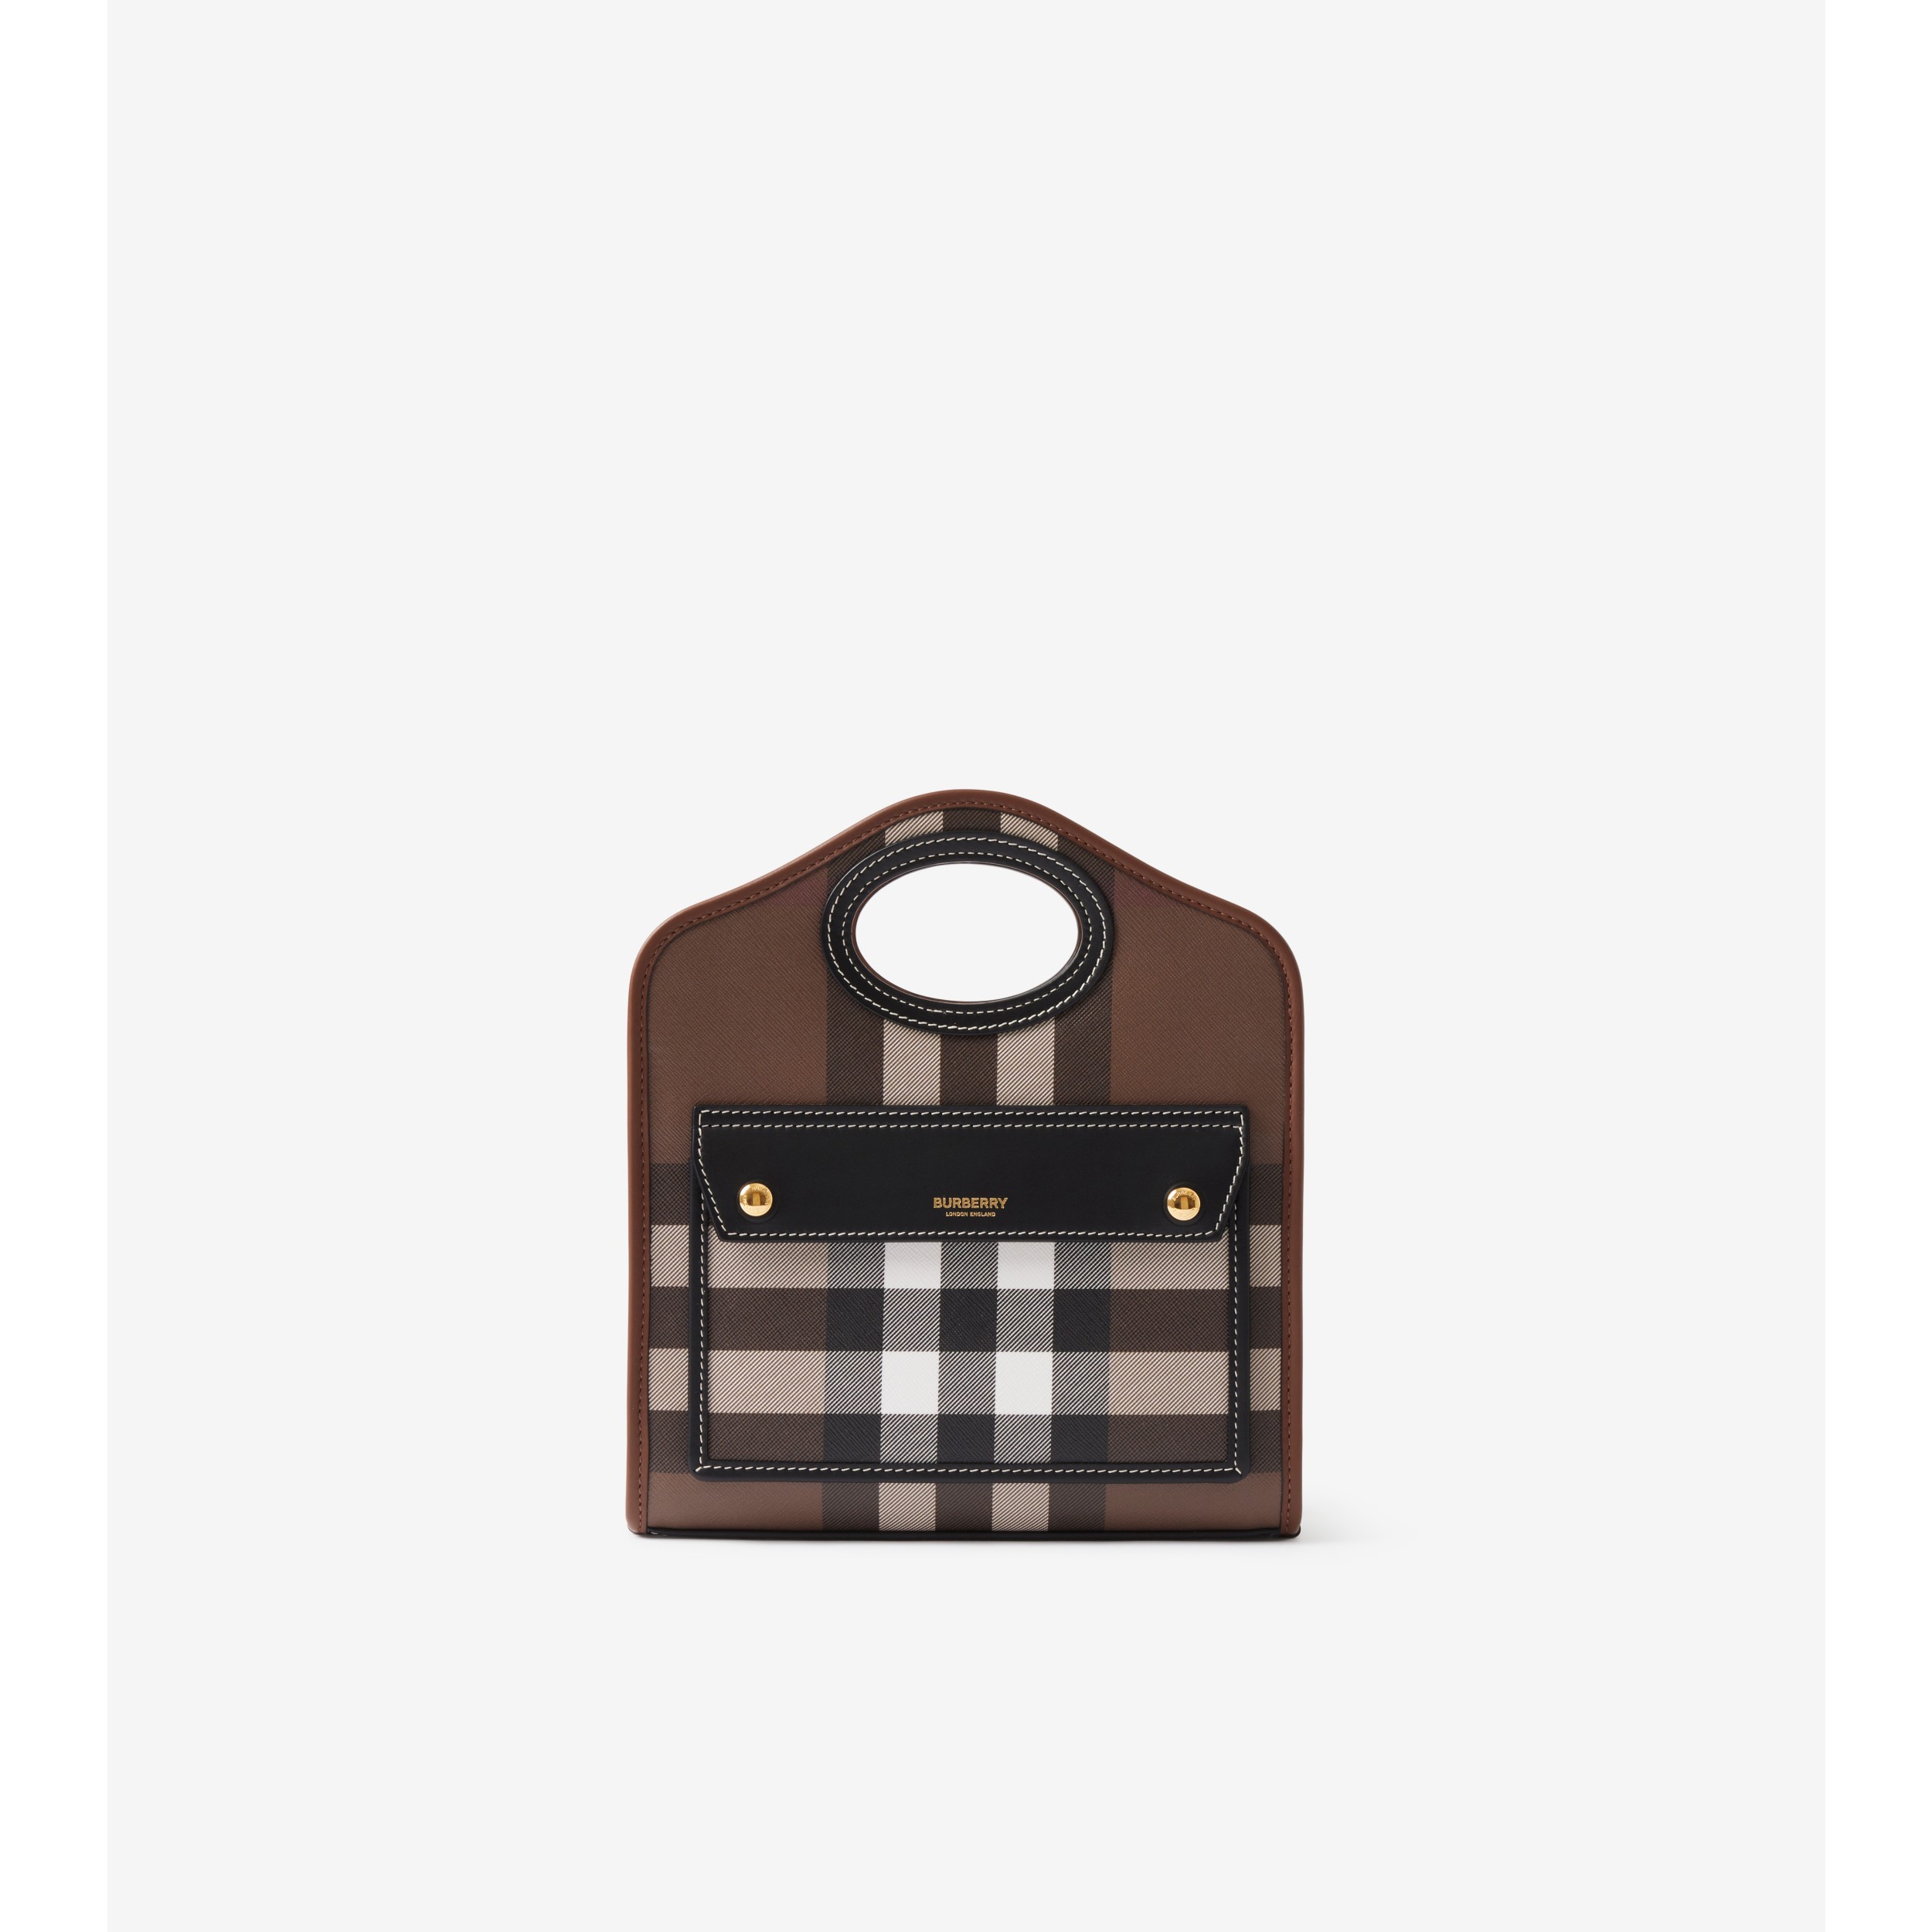 Burberry Mini Pocket Bag